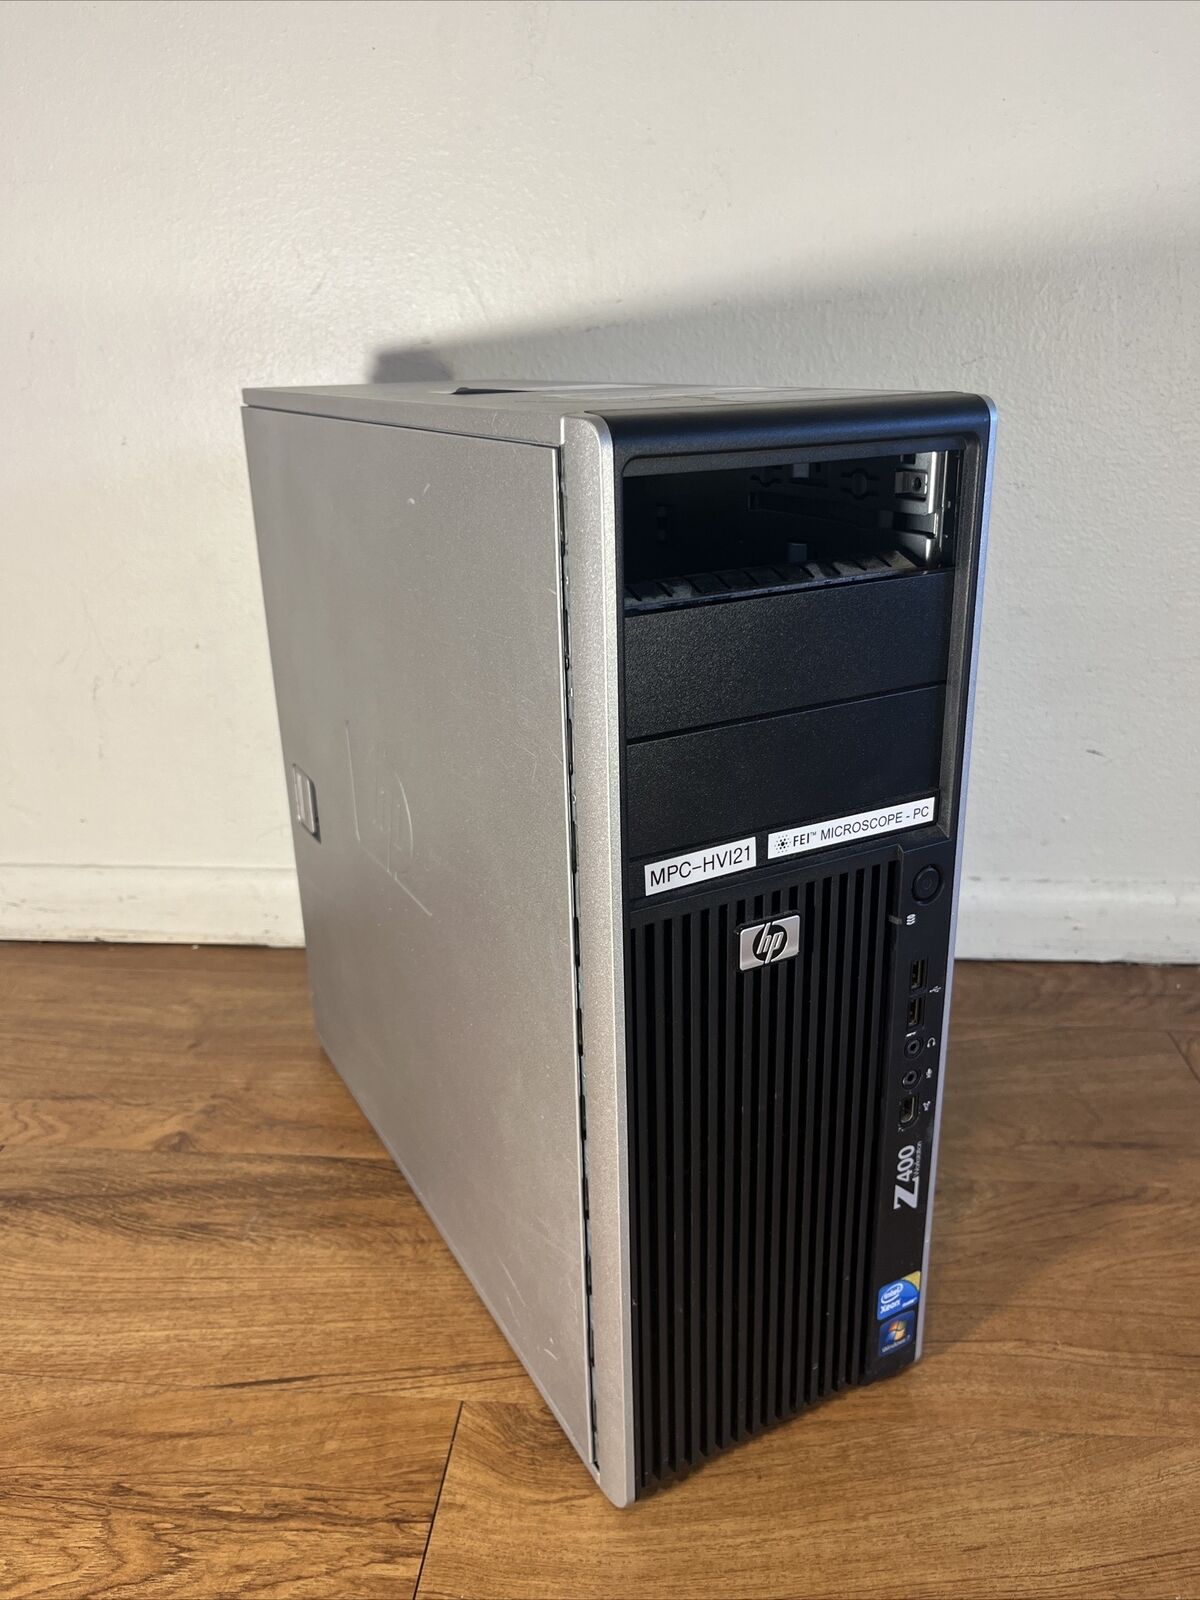 HP Z400 Xeon Computer Quad core W3520 @ 2.67 GHz 3 GB RAM Windows No HDD Tested